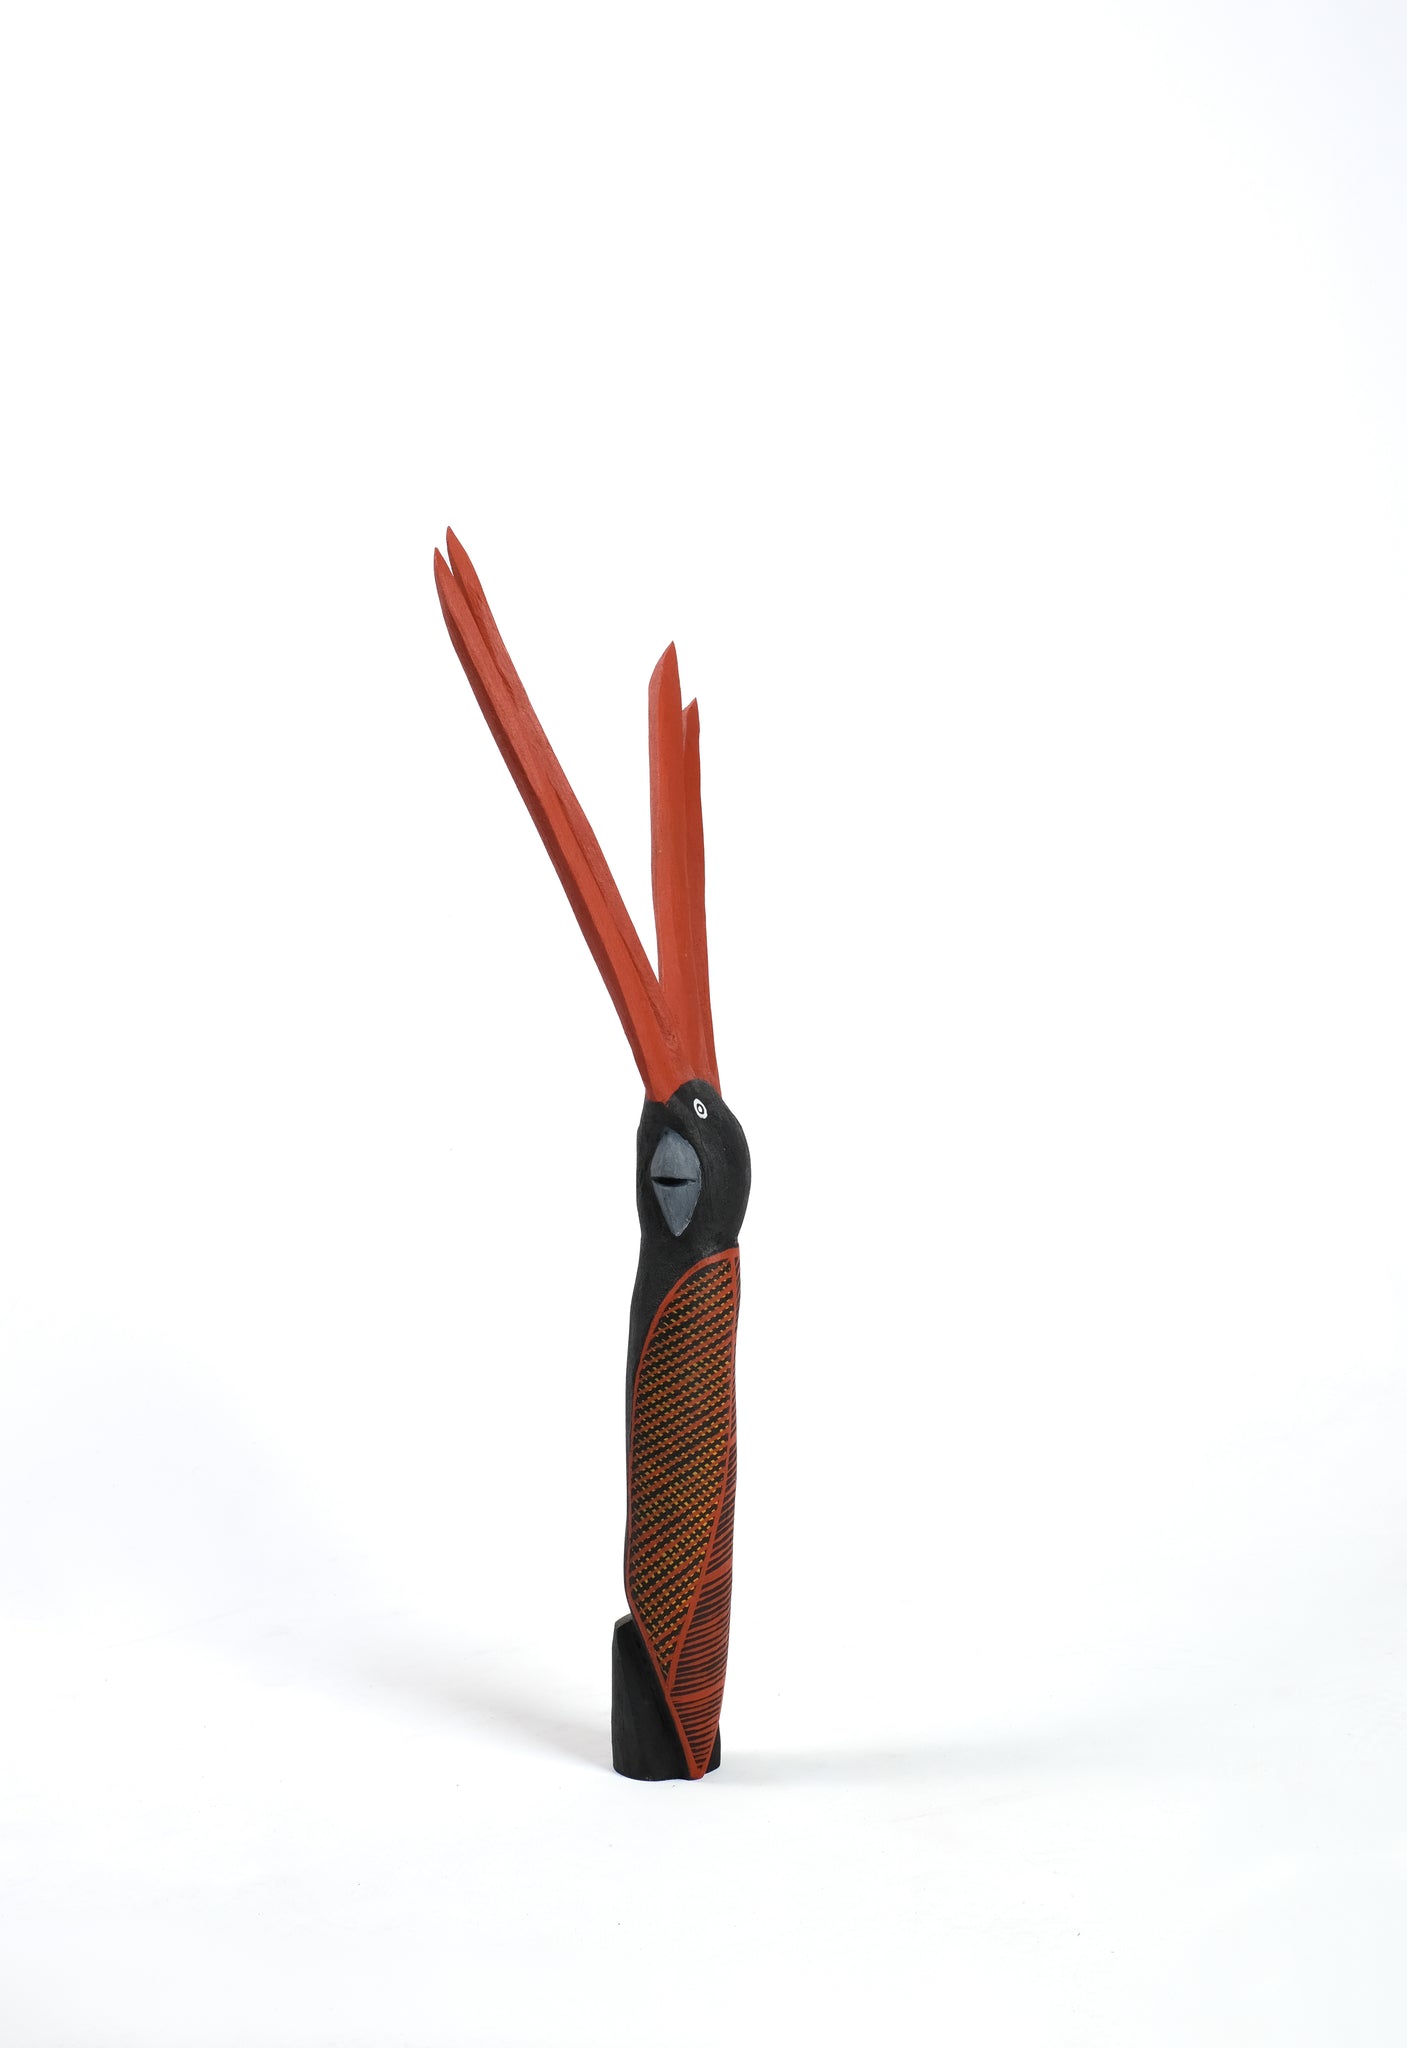 33. Karnamarr (Red Tailed Black Cockatoo)